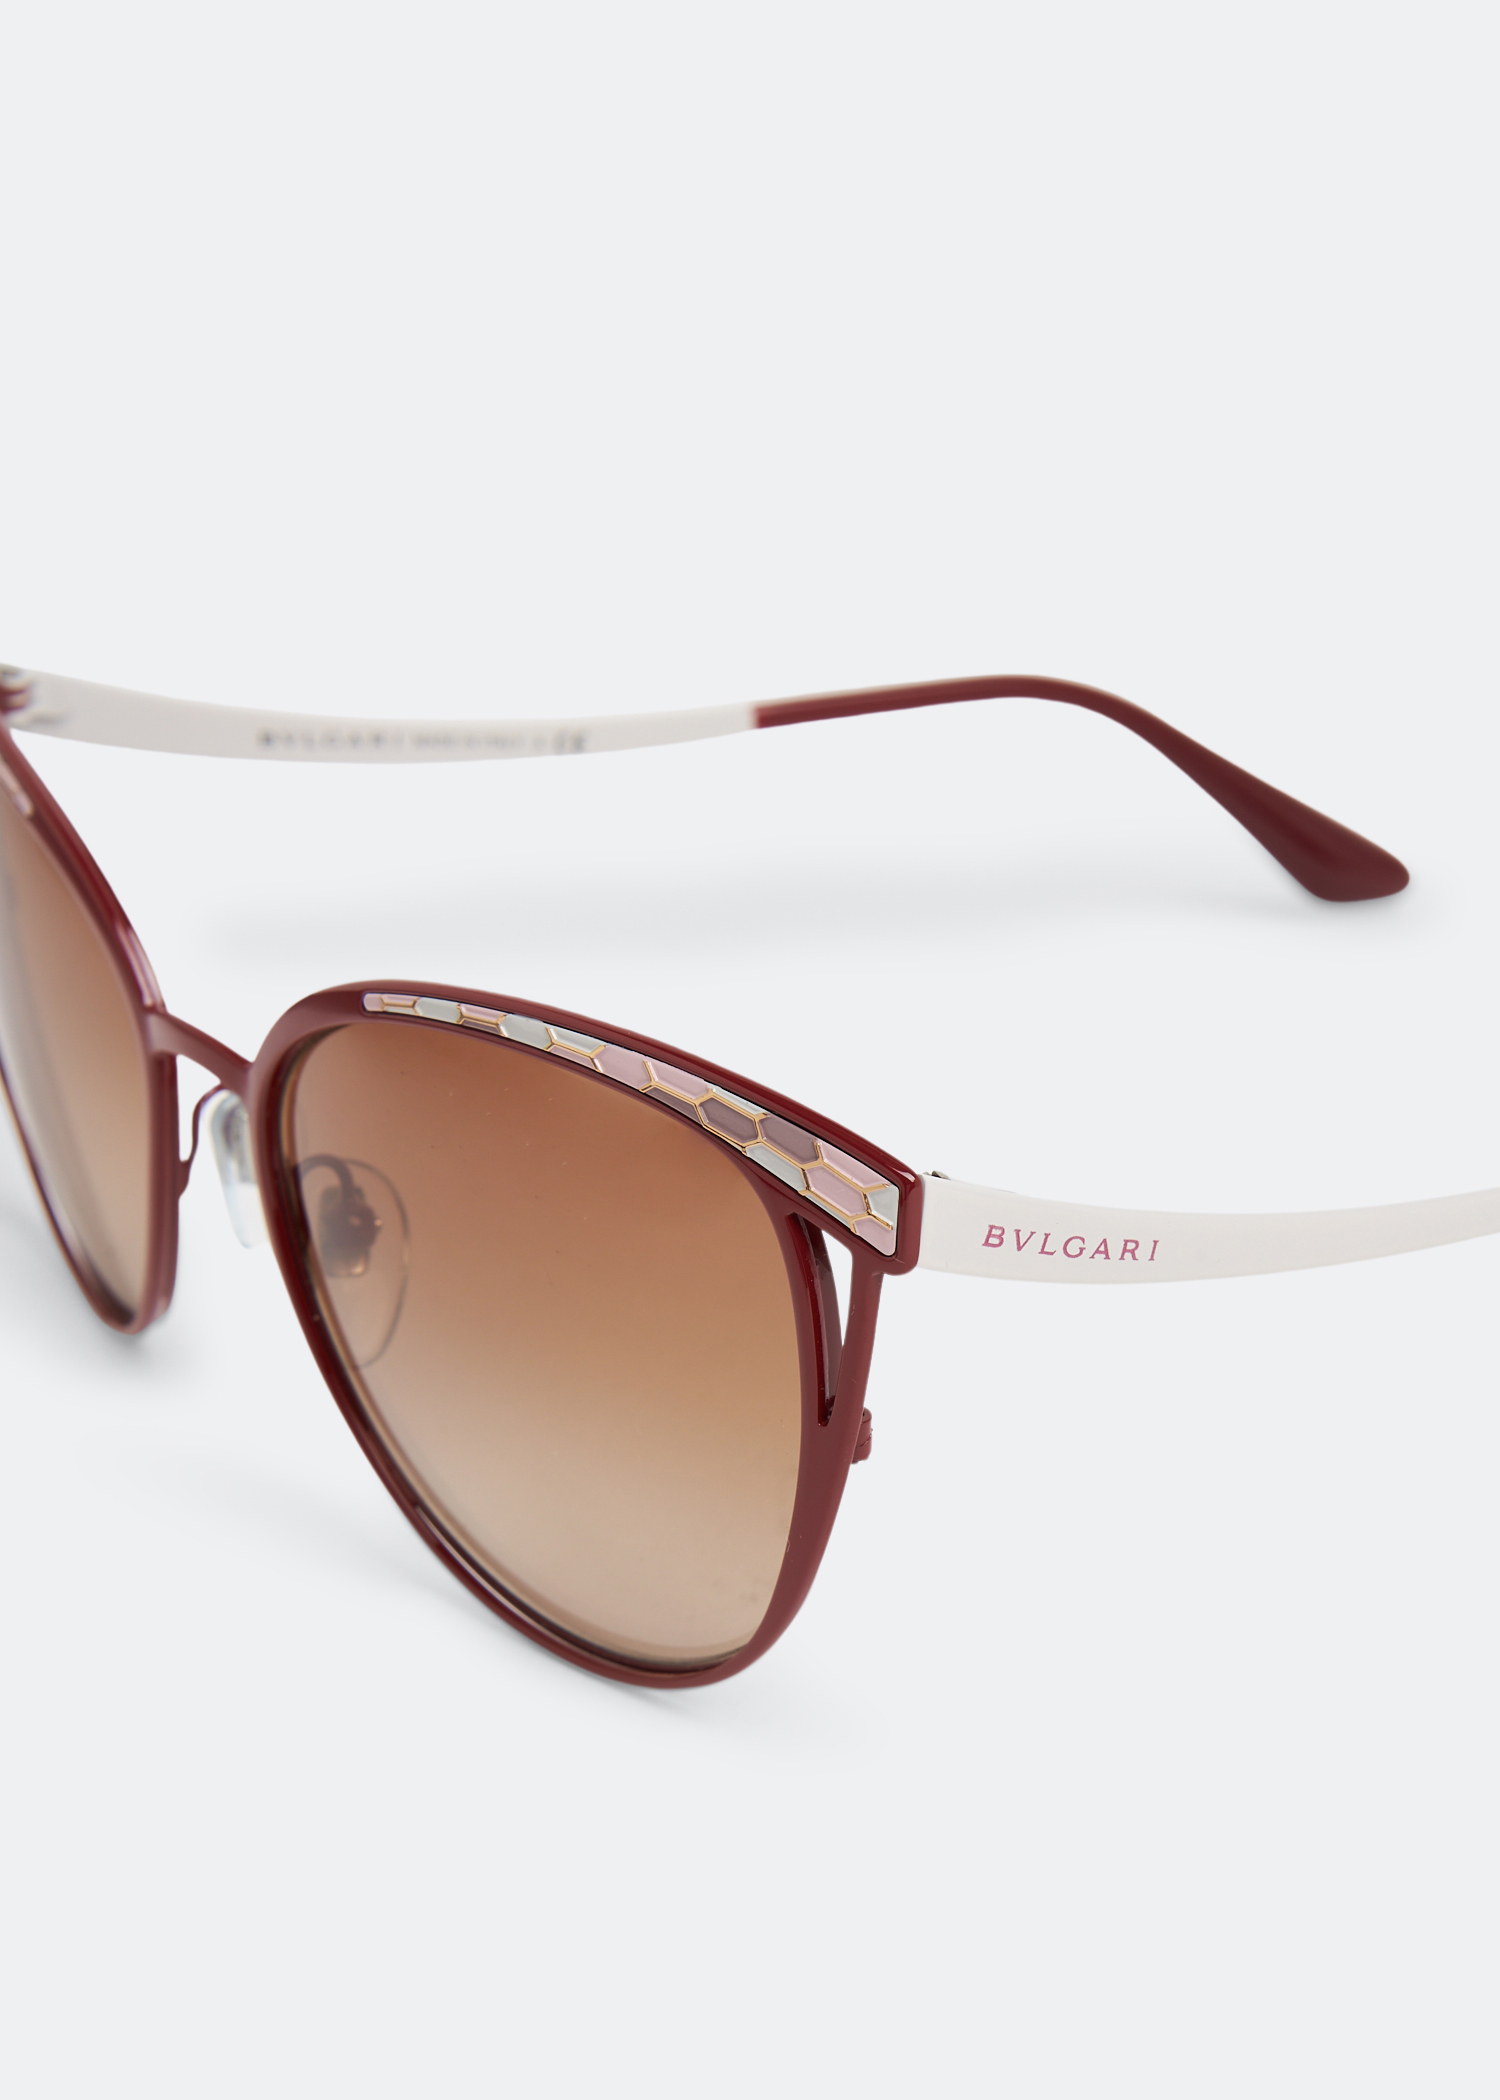 BVLGARI Sunglasses for Women | dubizzle